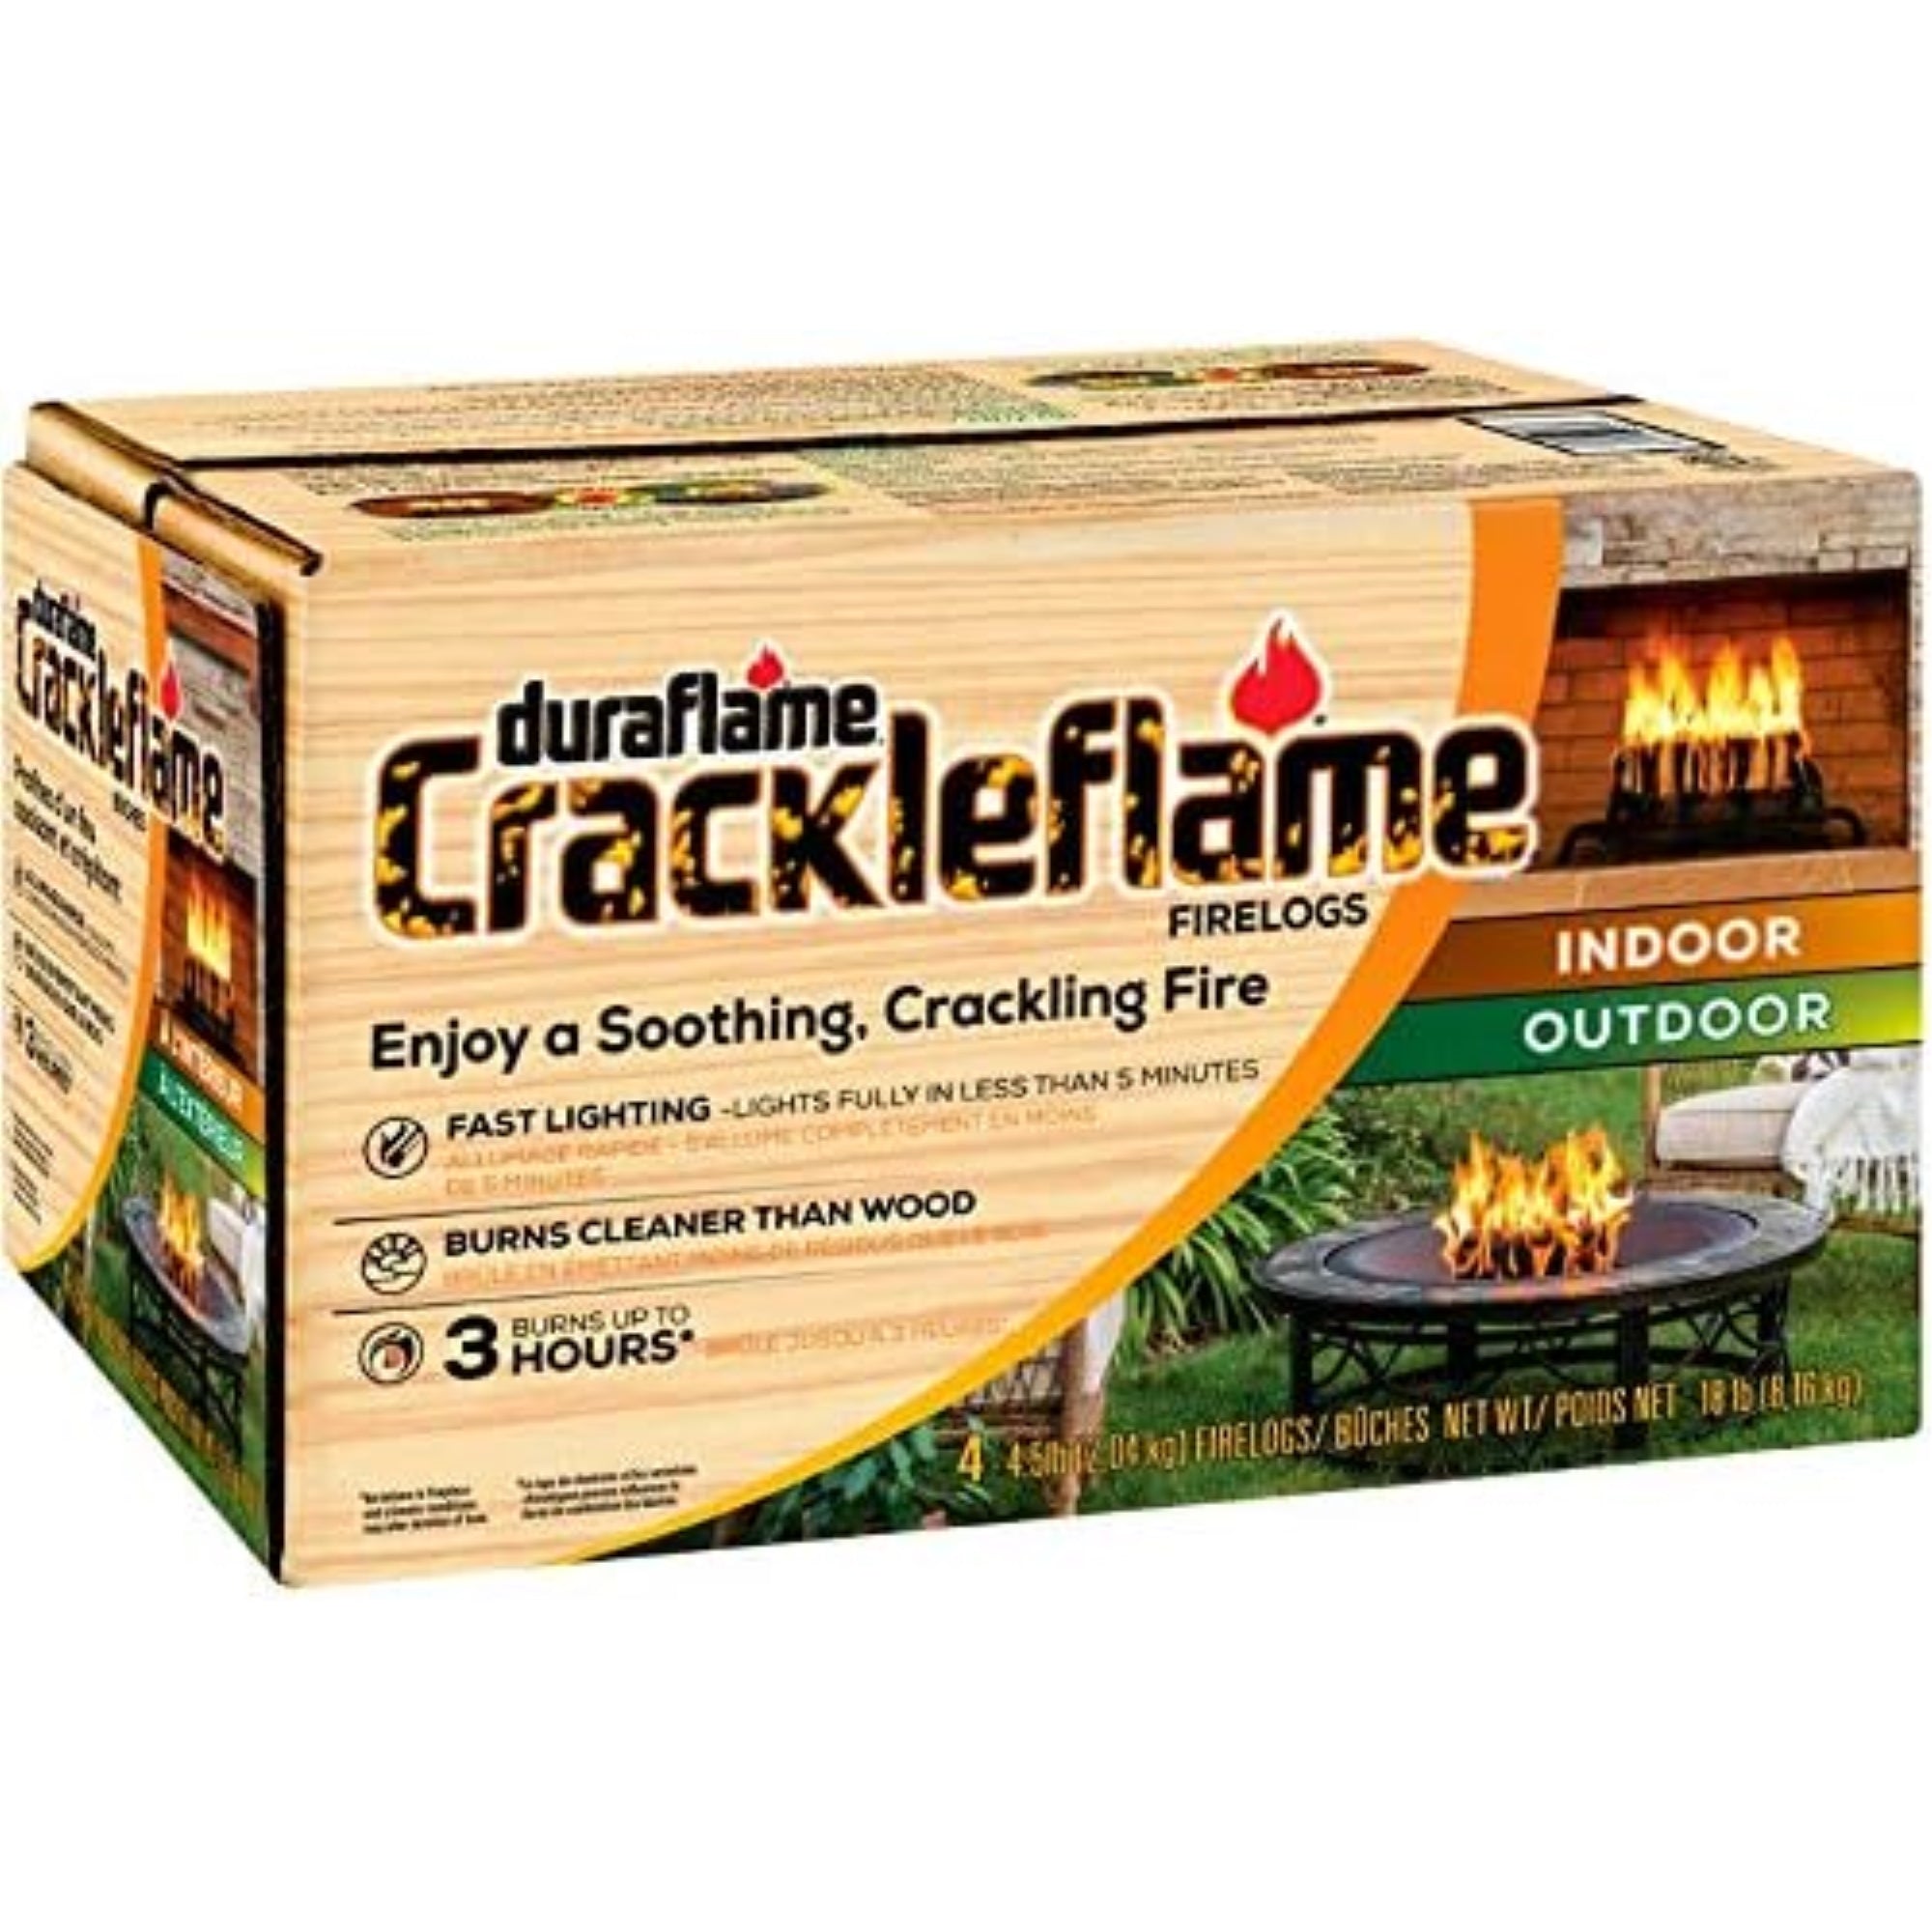 Duraflame Crackleflame 4.5lb Indoor Outdoor Firelogs (Pack of 4)